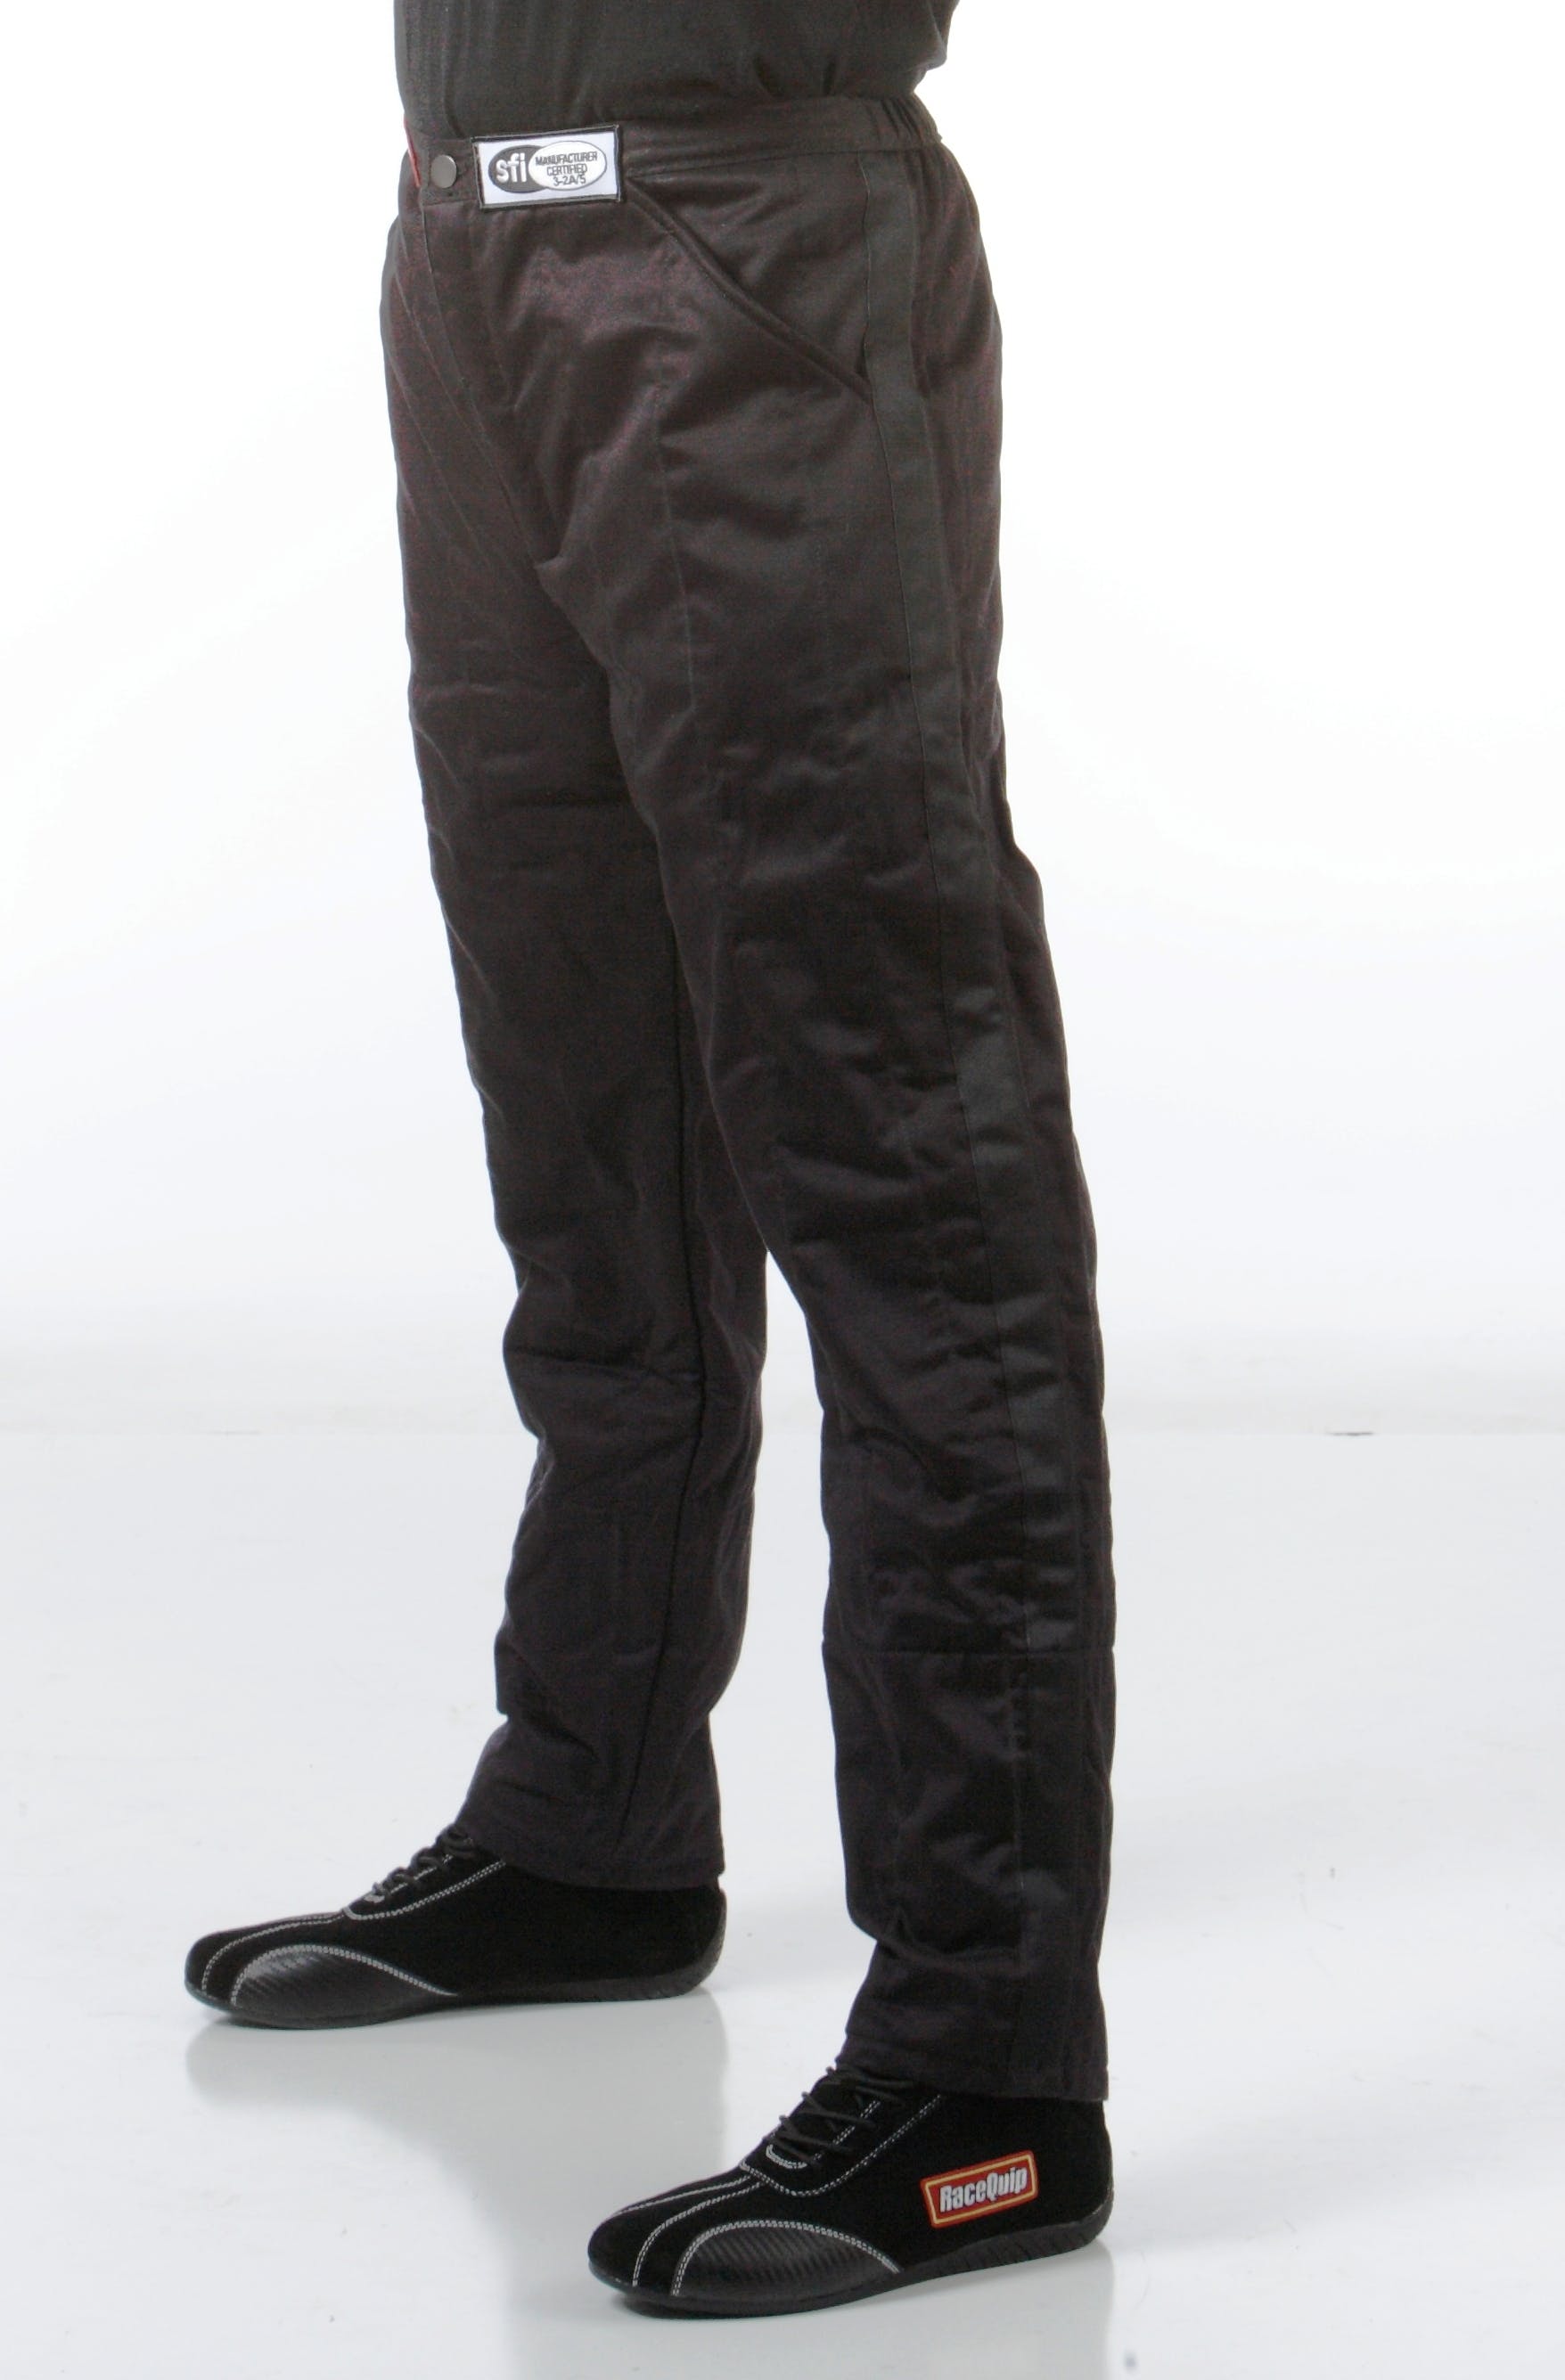 RaceQuip 122004 SFI-5 Pyrovatex Multi-Layer Racing Fire Pants (Black, Medium-Tall)